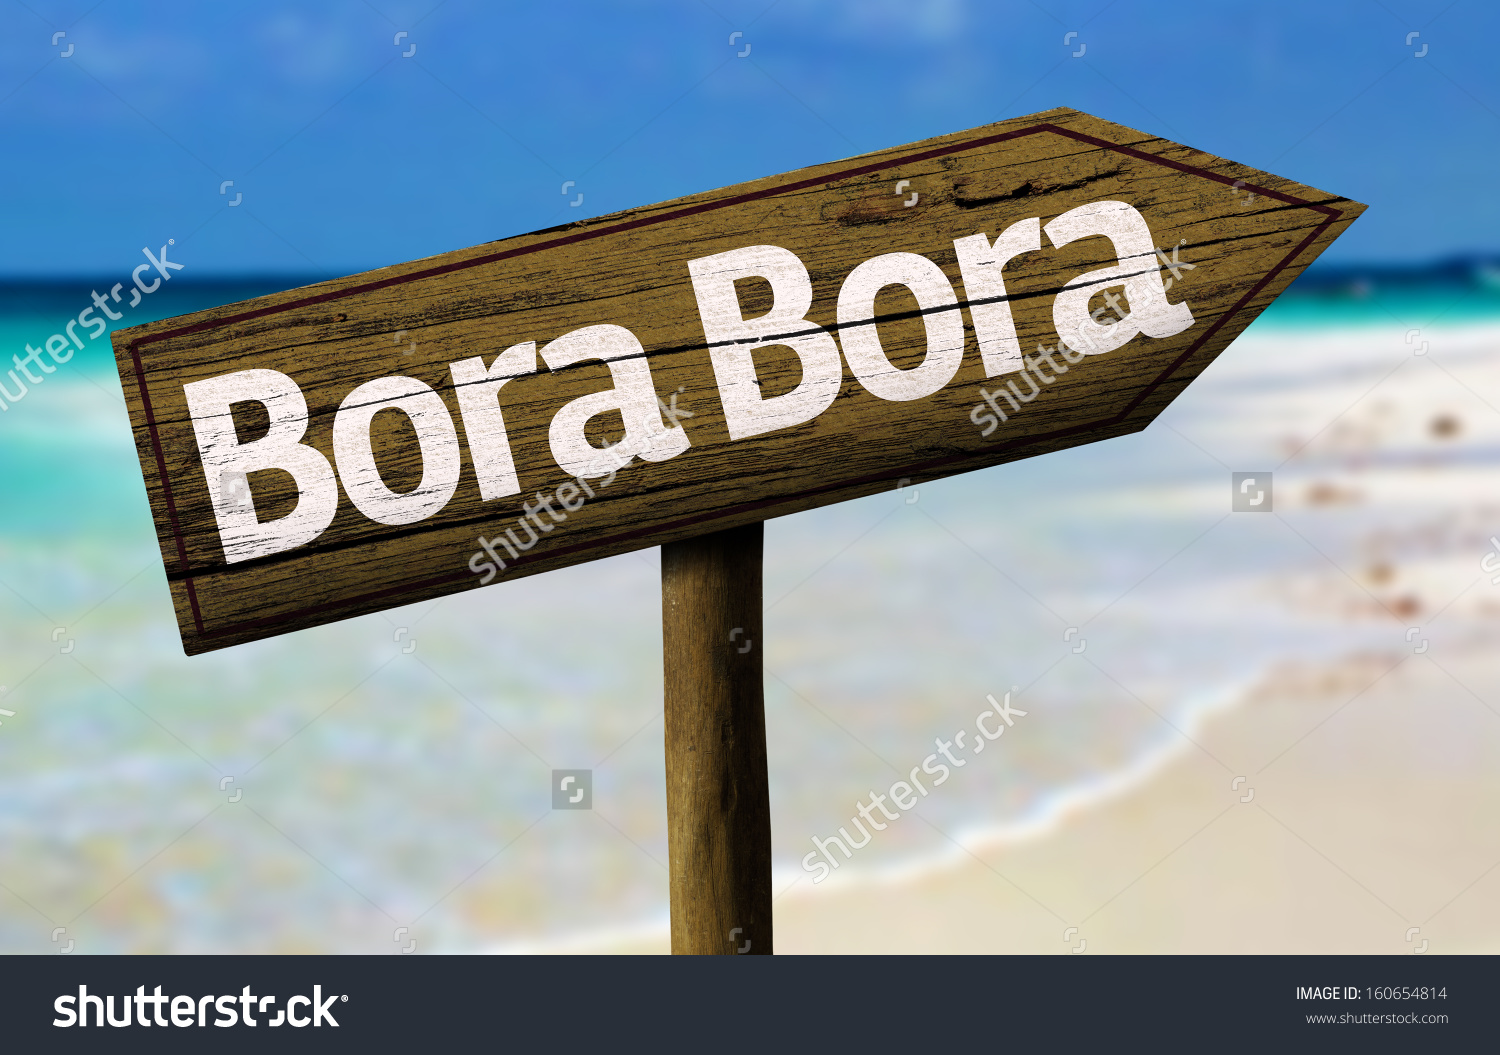 Bora Bora clipart #2, Download drawings